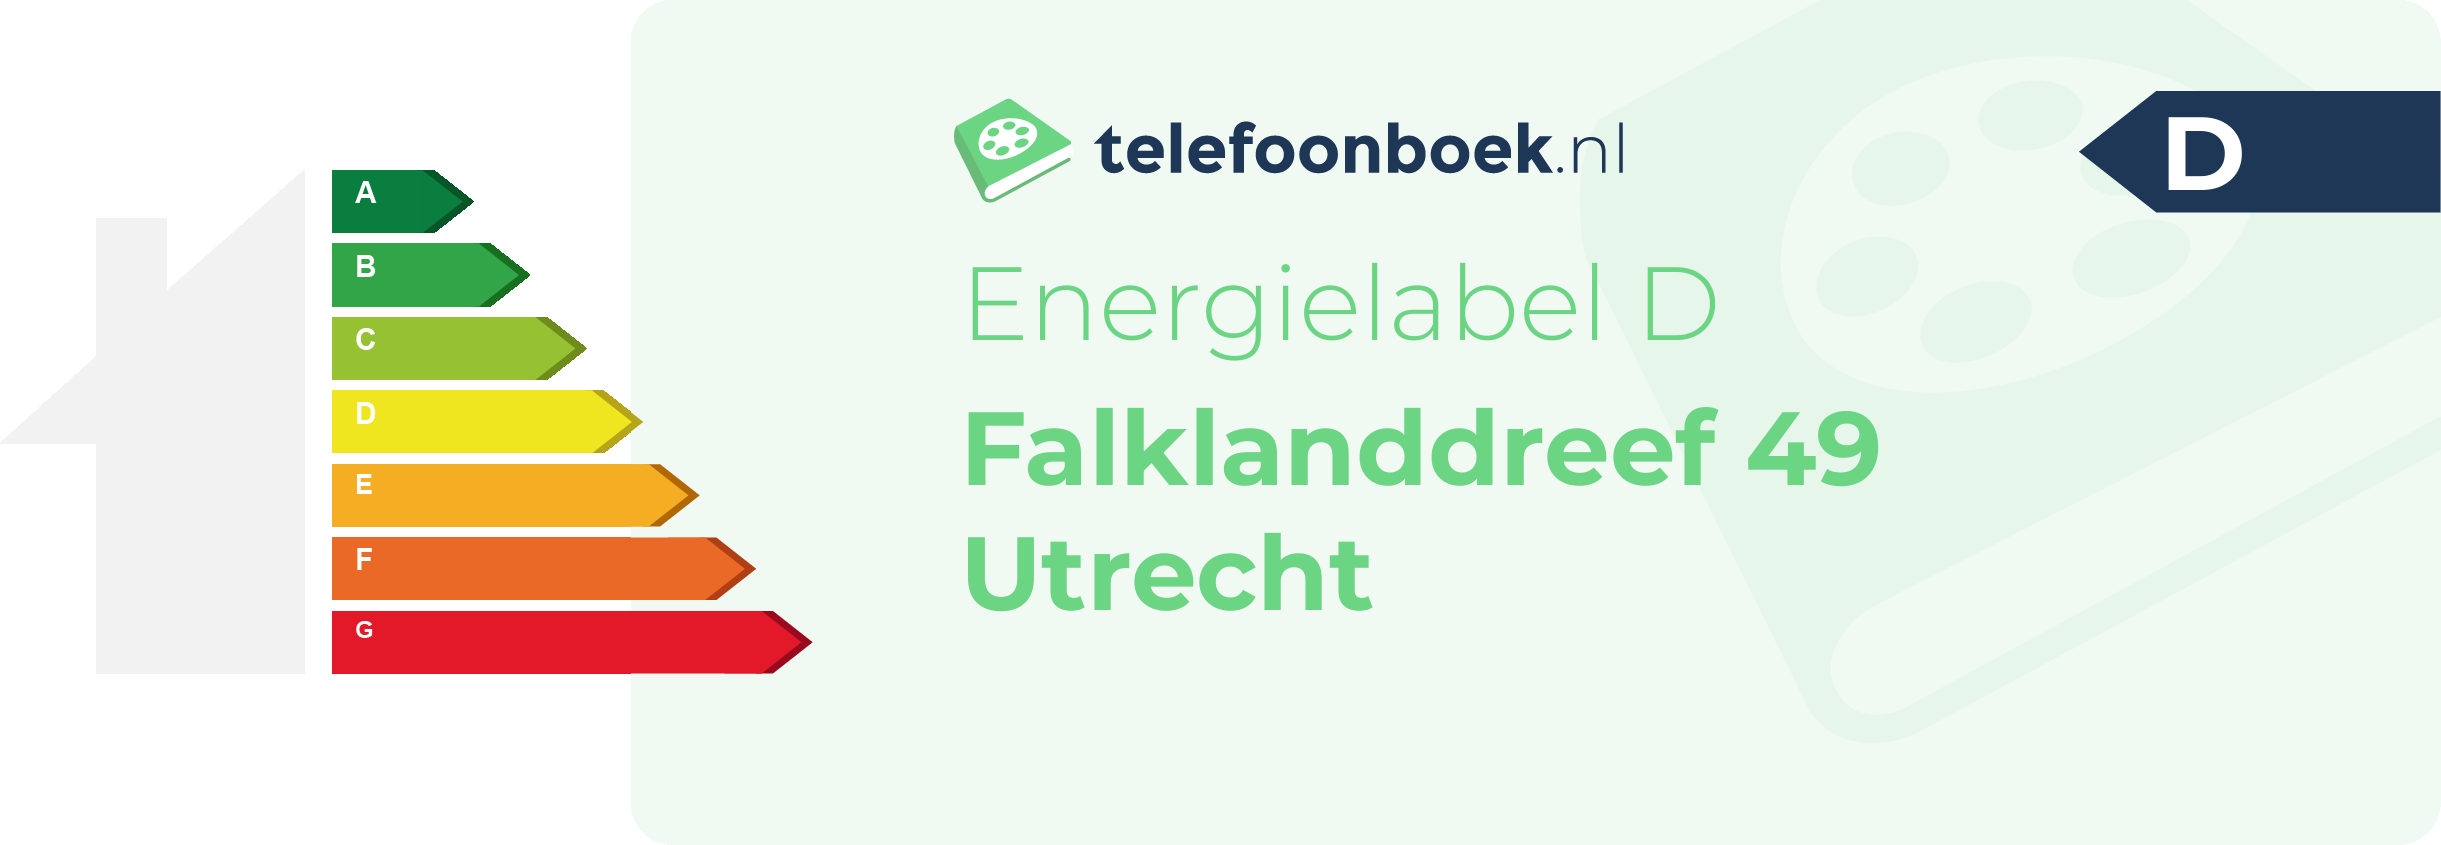 Energielabel Falklanddreef 49 Utrecht